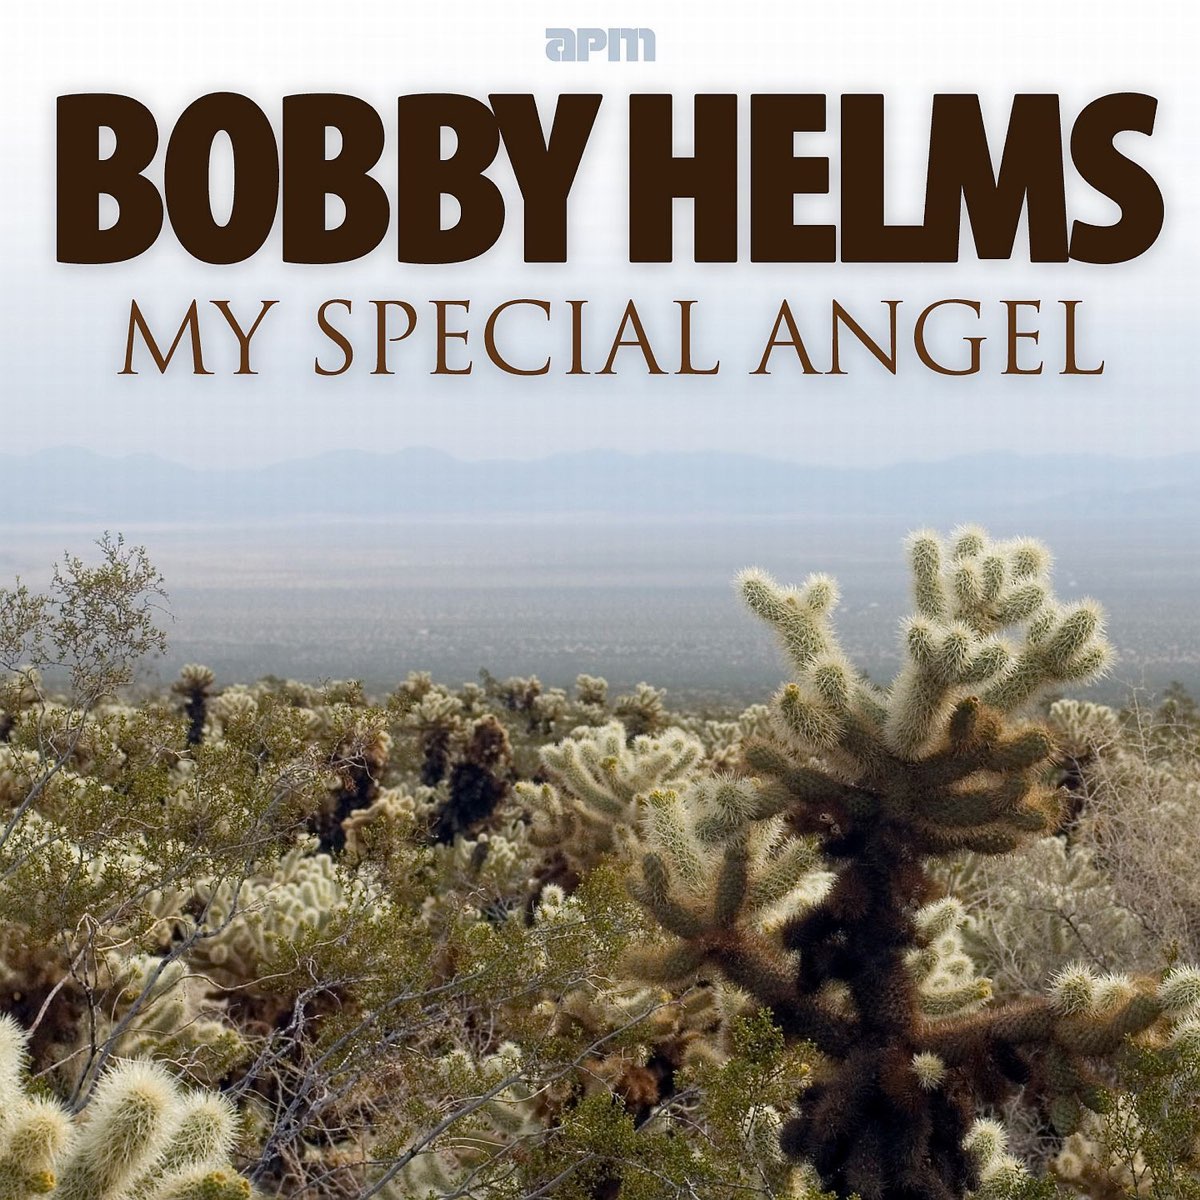 Bobby helms my special angel lyrics